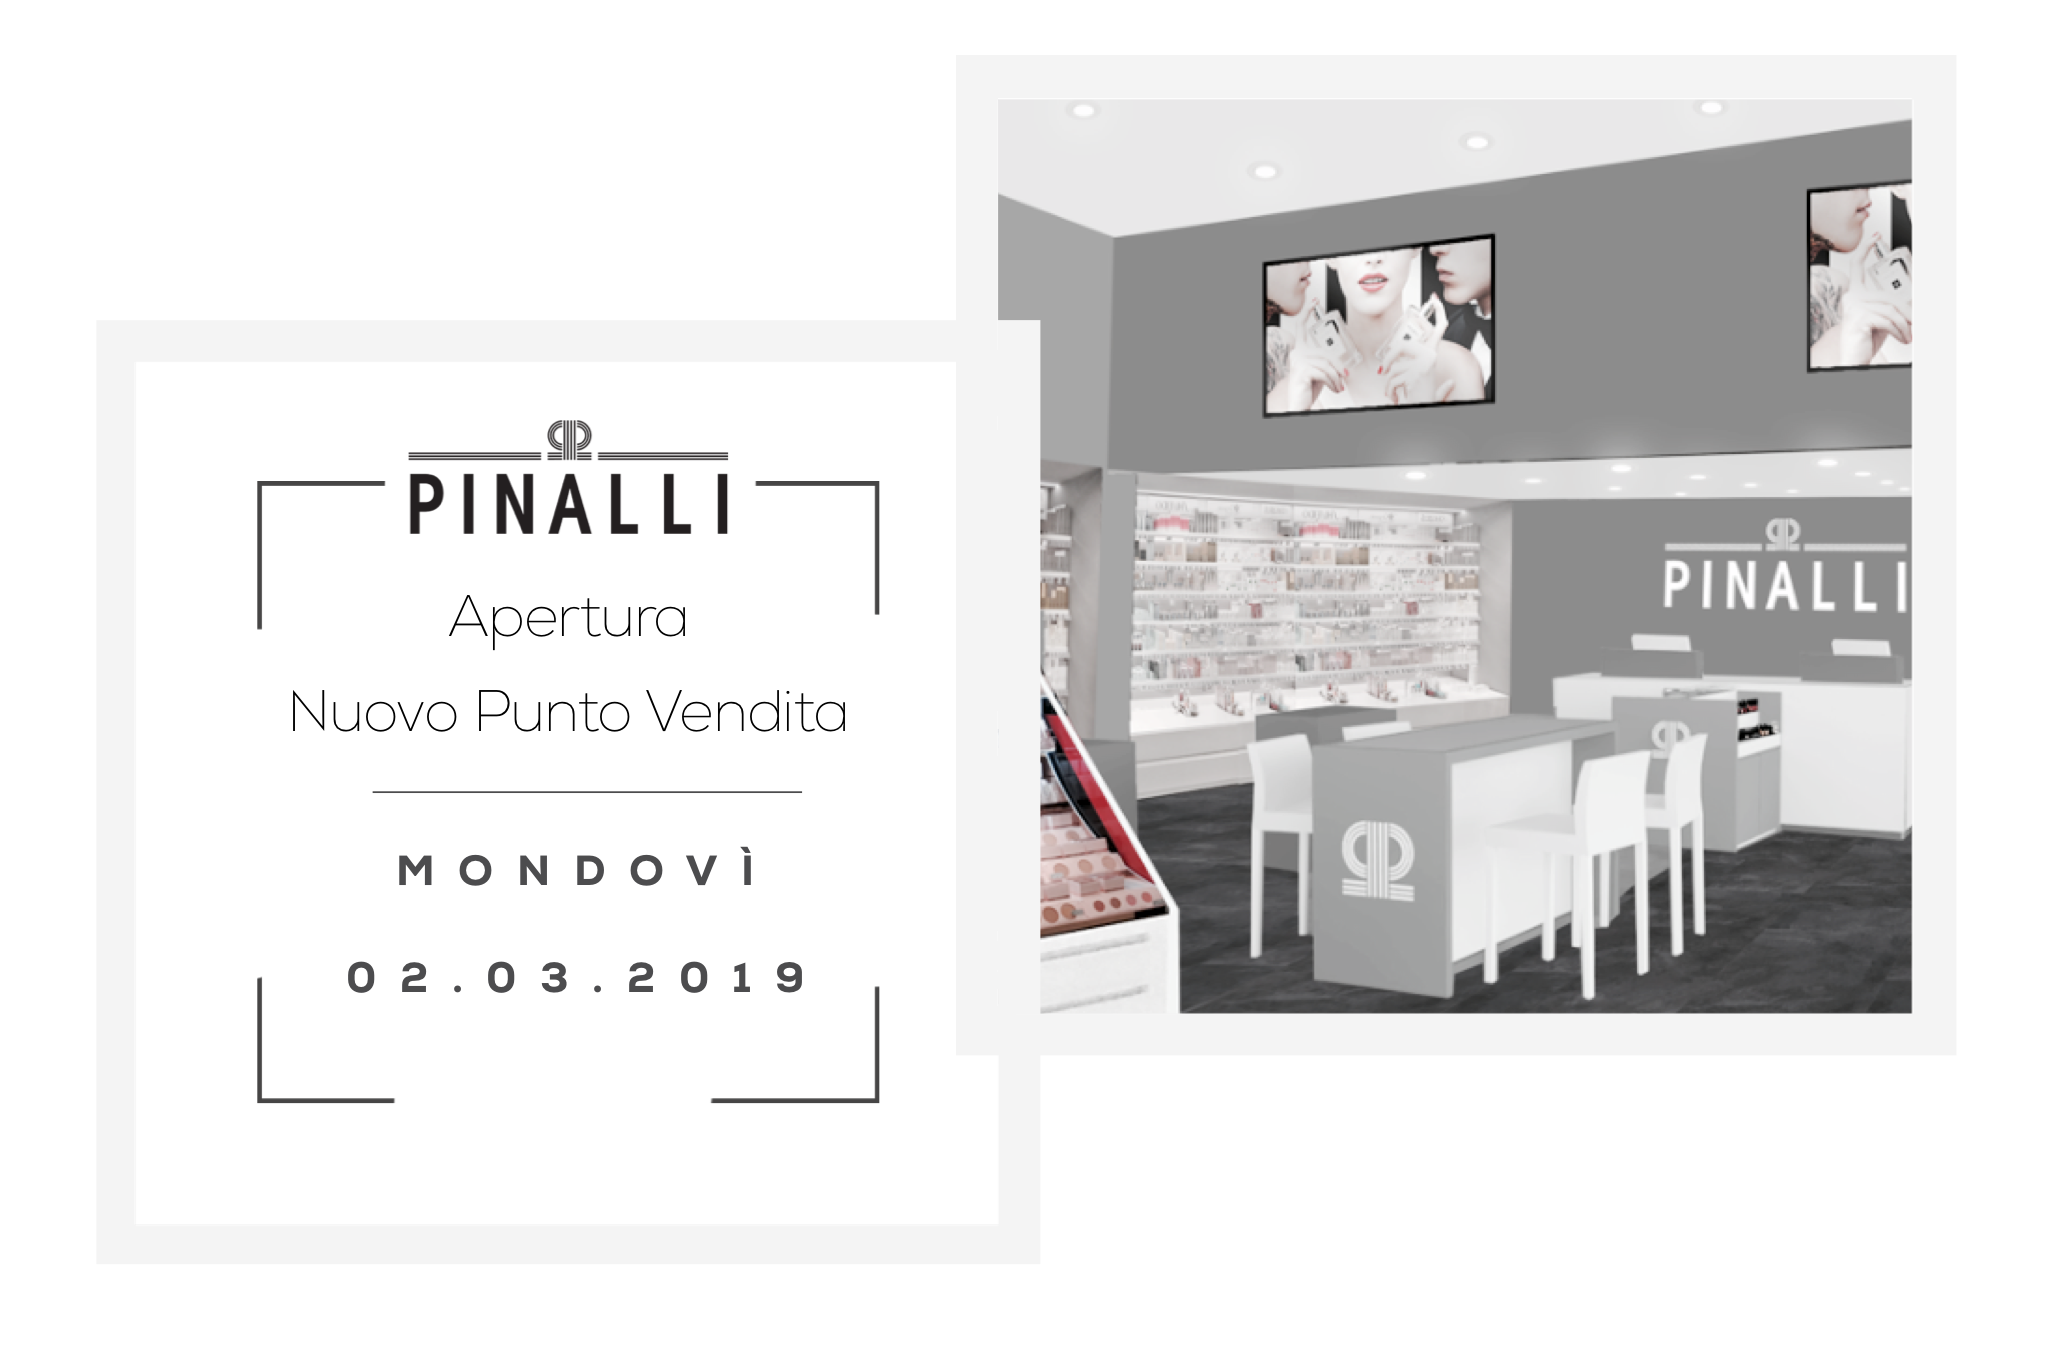 Pinalli apre a Mondovì un nuovo punto vendita